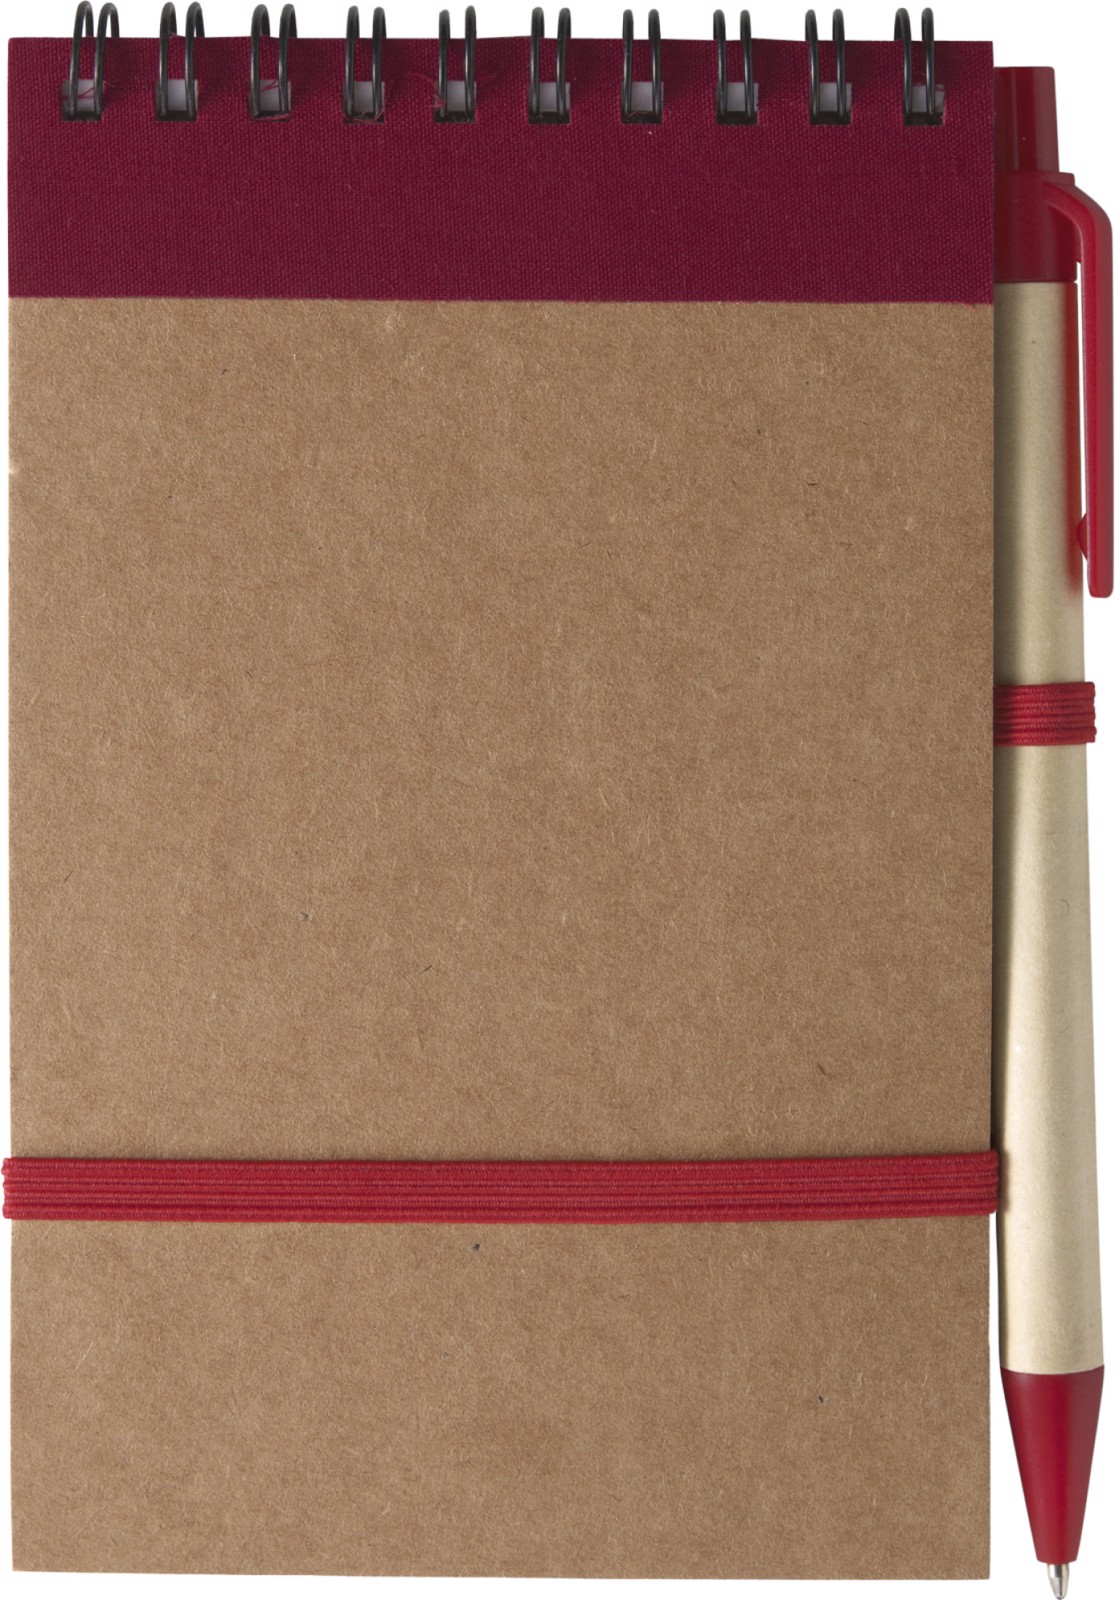 Cardboard notebook - Red